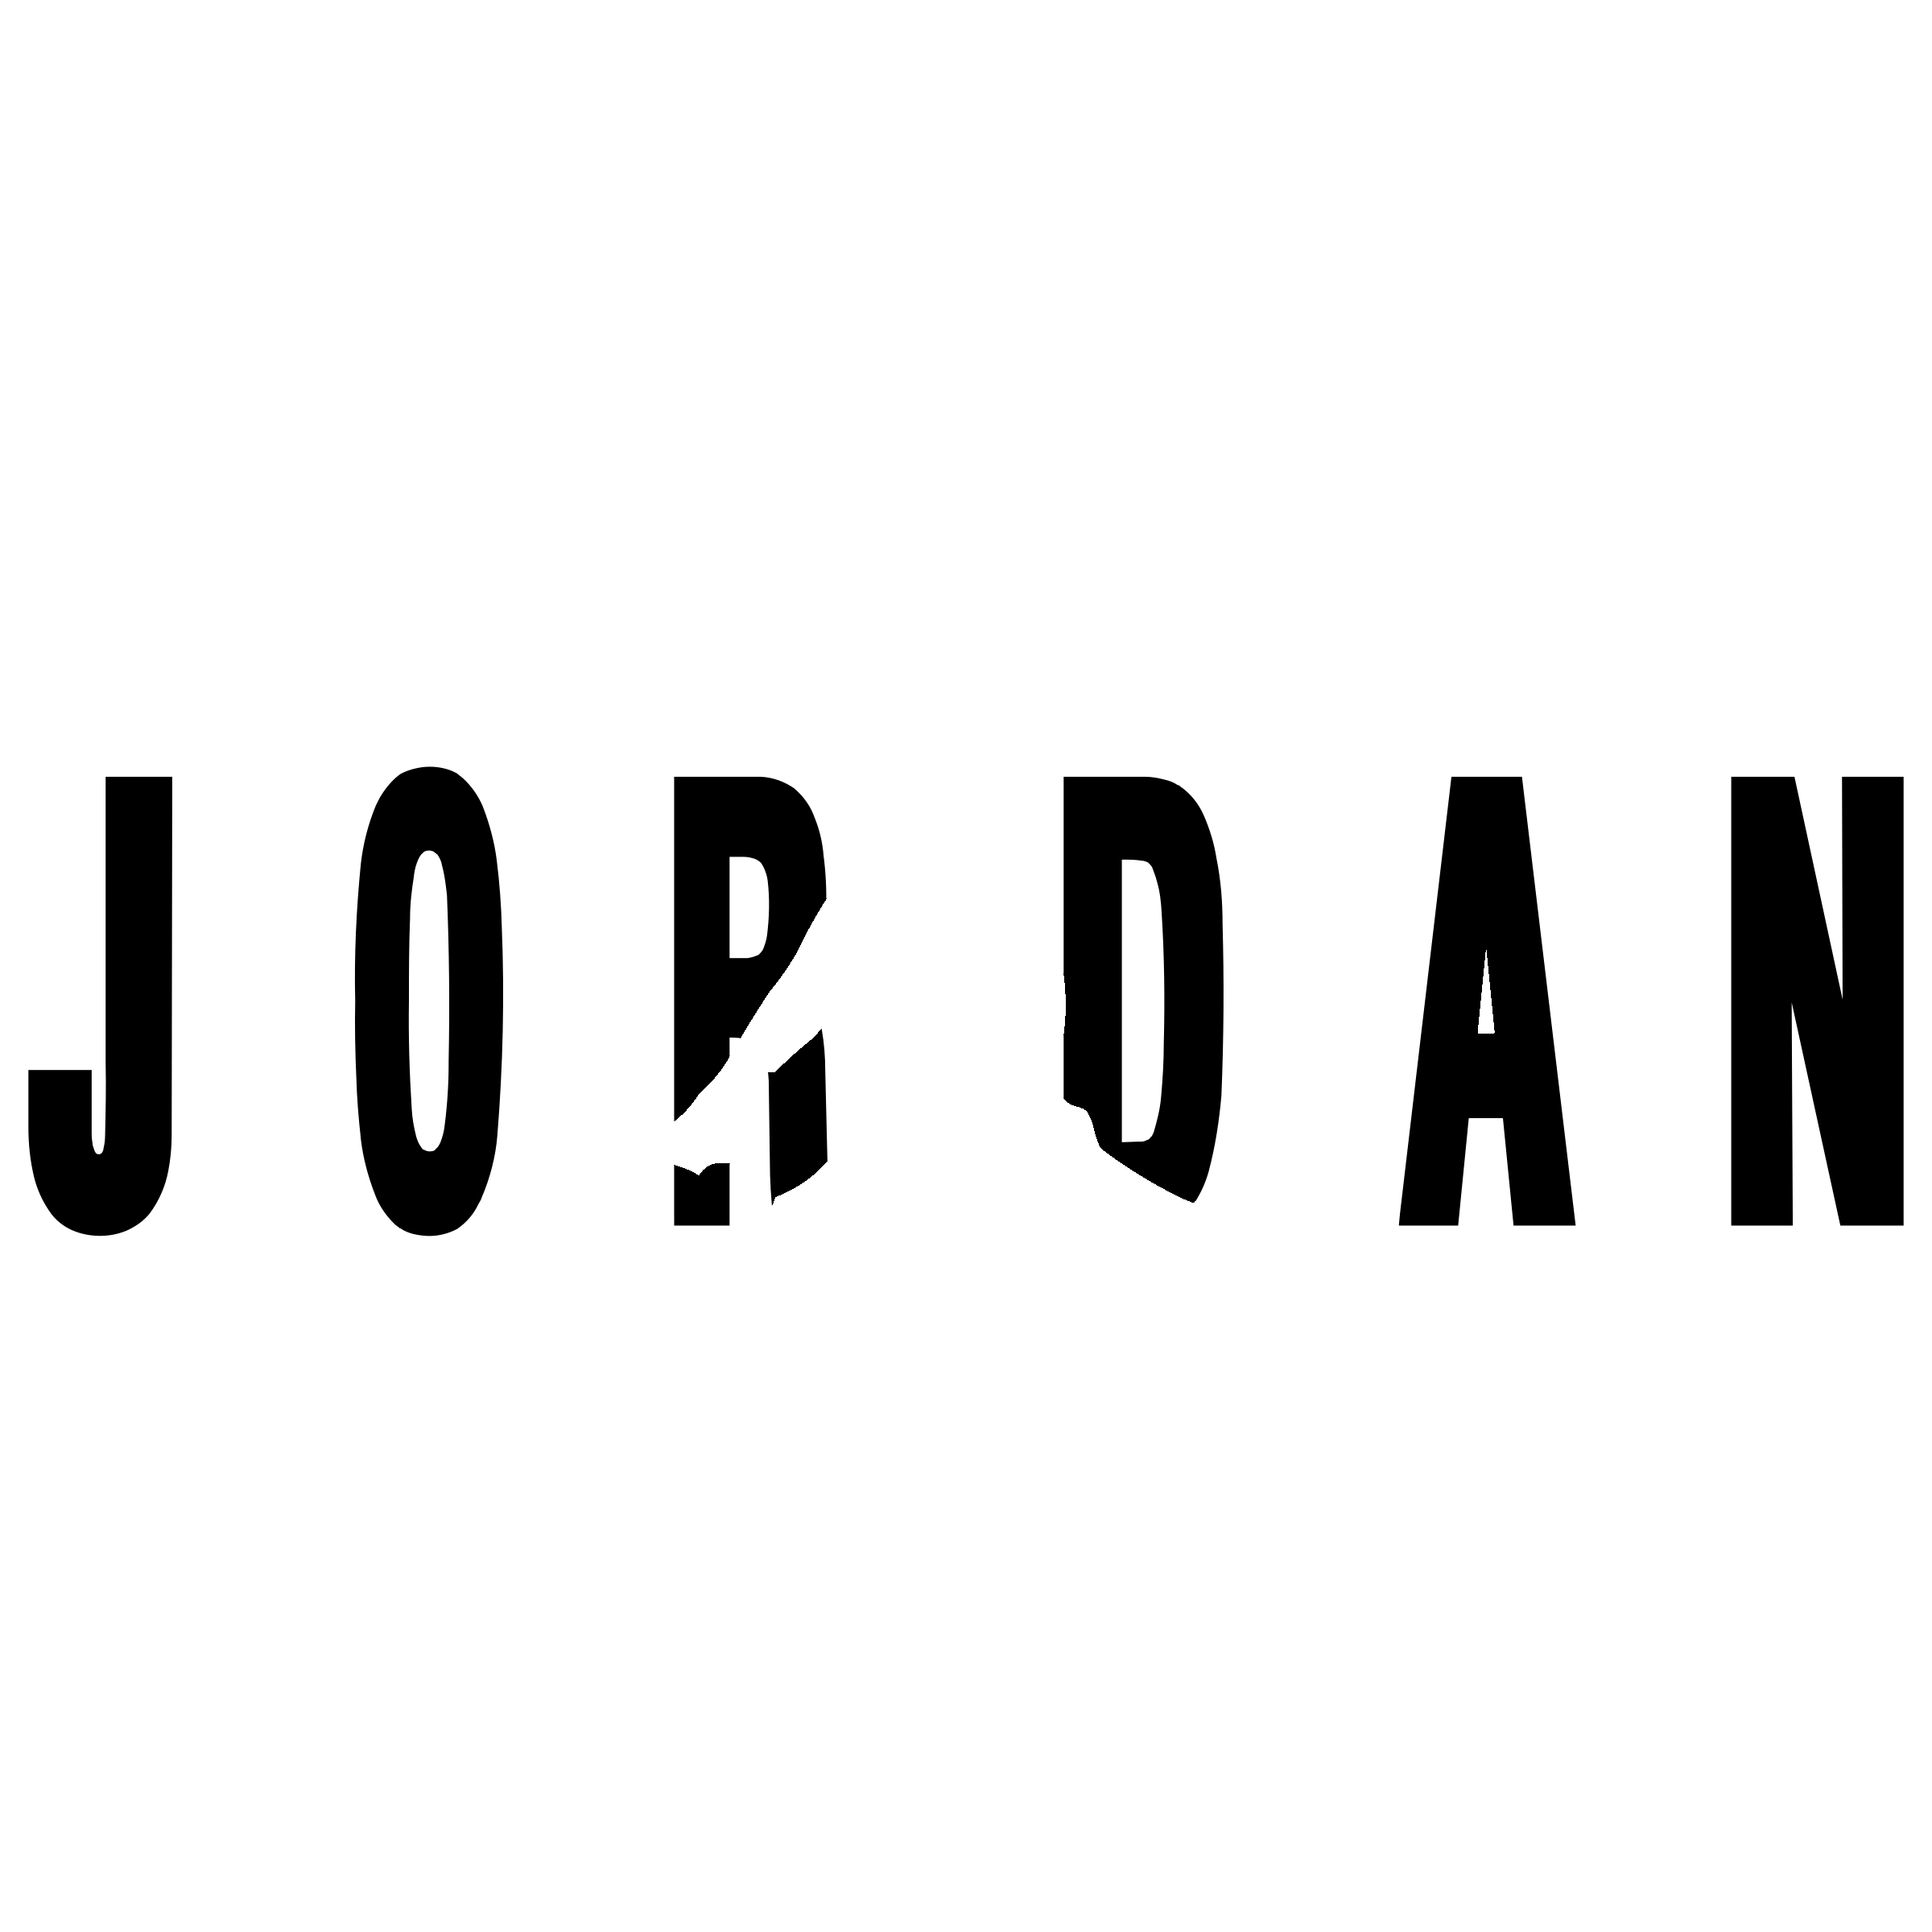 Jordan Logo - Jordan Air Logo PNG Transparent & SVG Vector - Freebie Supply